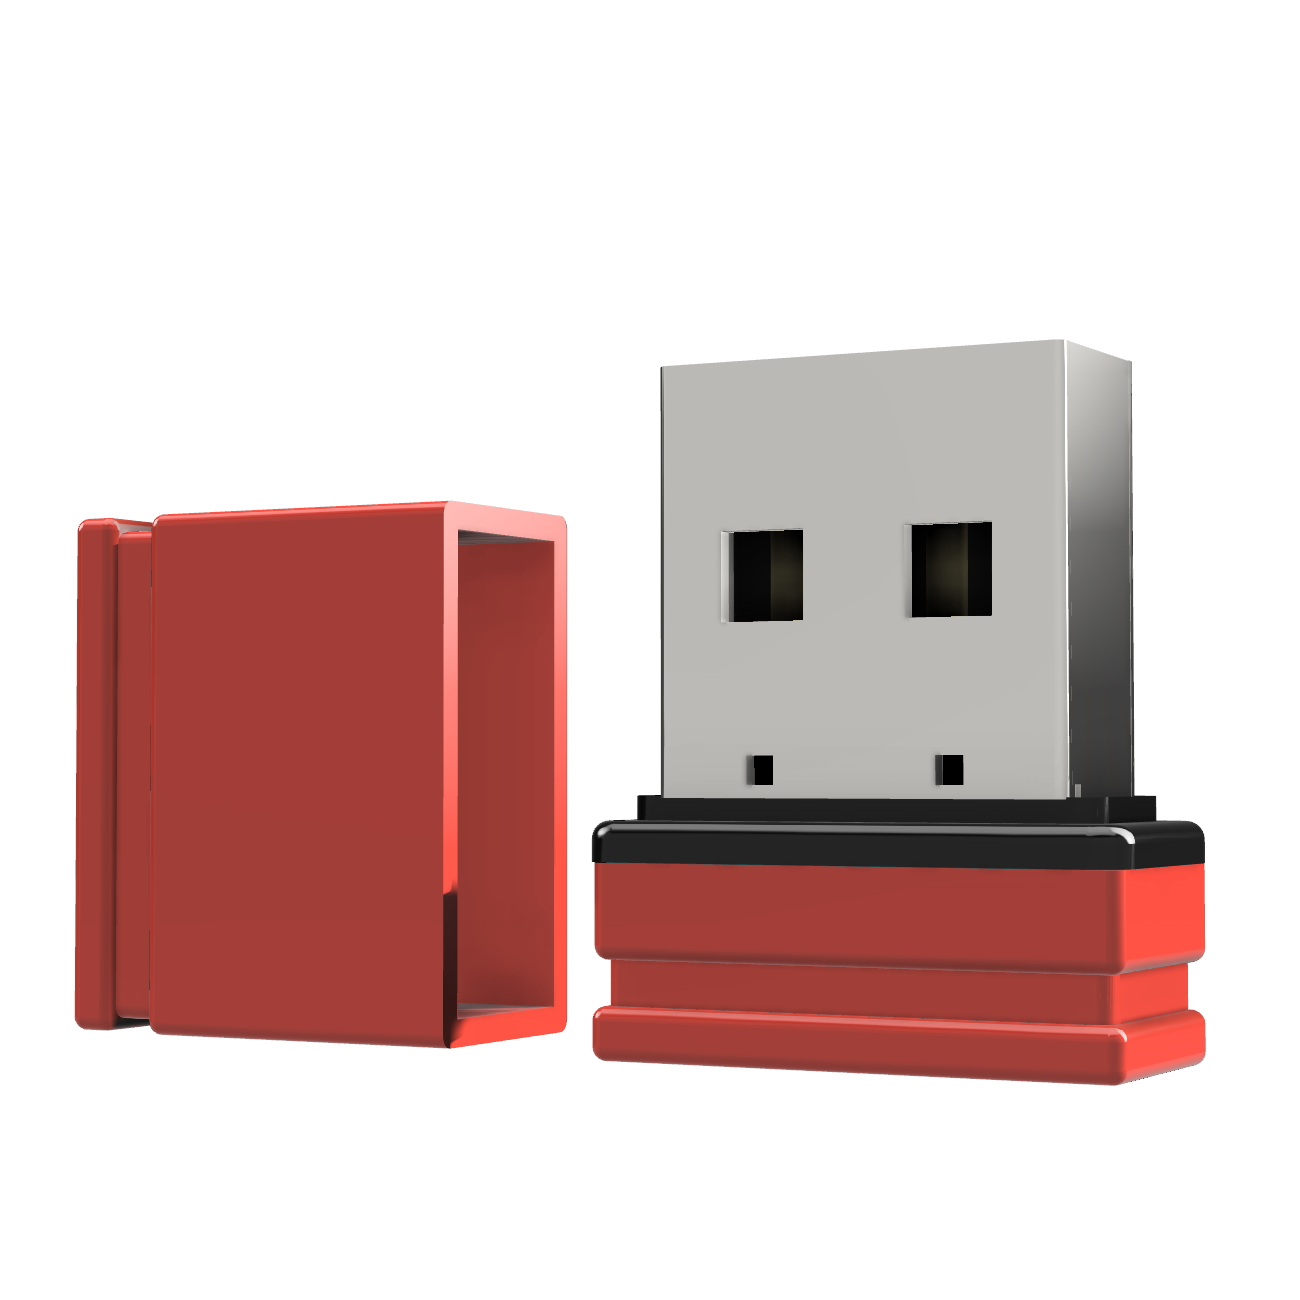 P1 Mini USB GERMANY GB) (Rot/Schwarz, ®ULTRA USB-Stick 2